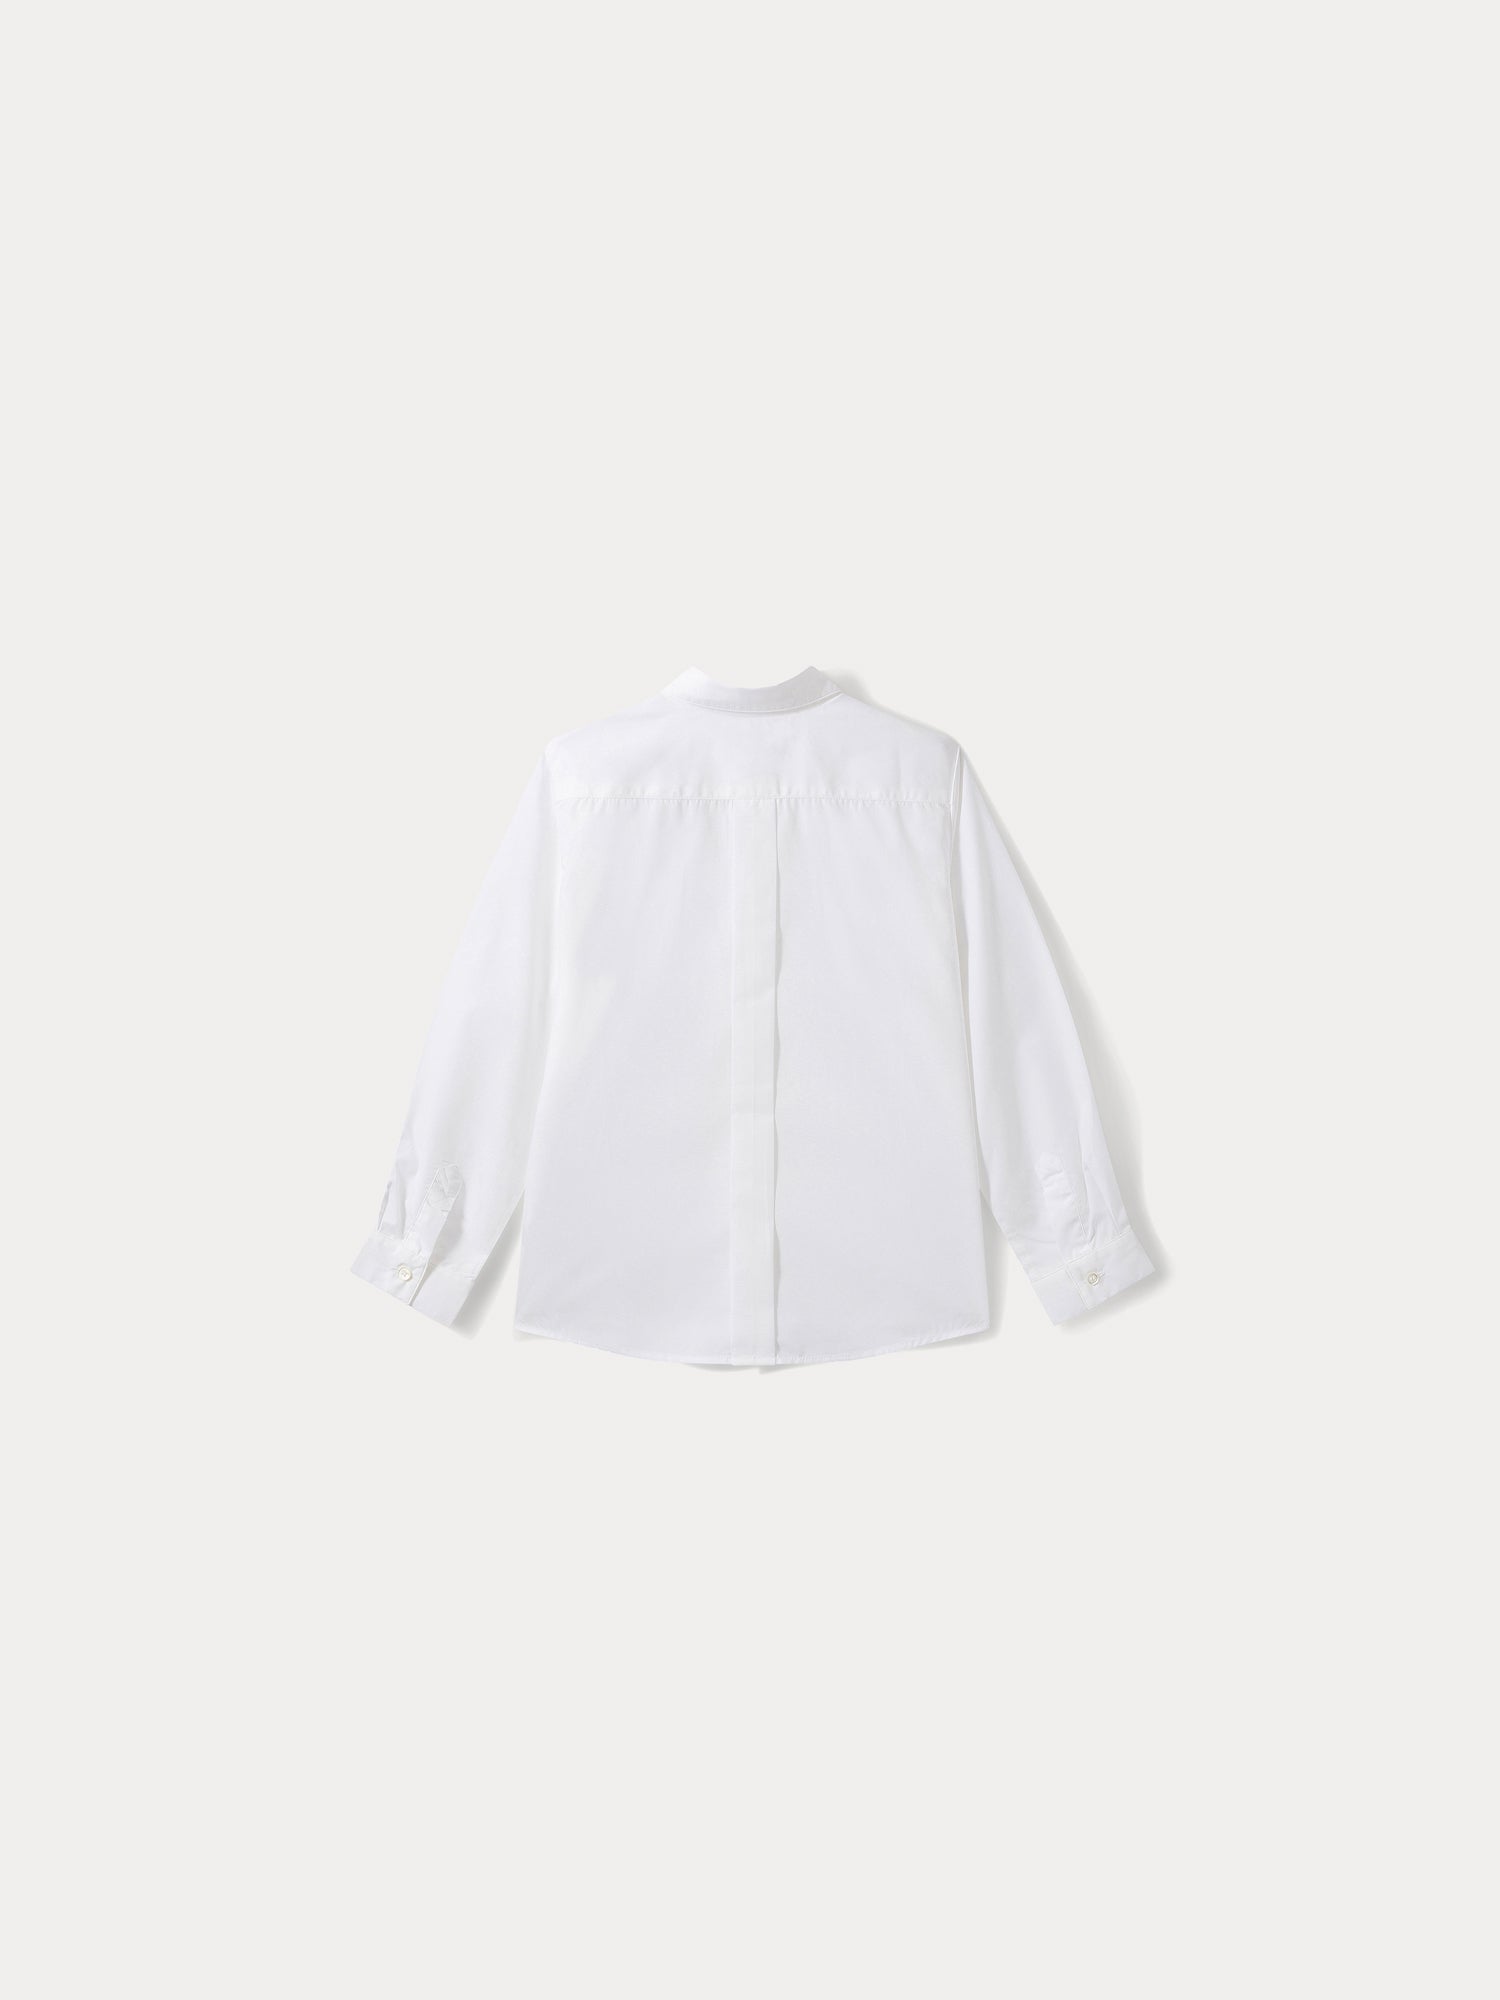 Bonpoint Auguste button-up shirt - White